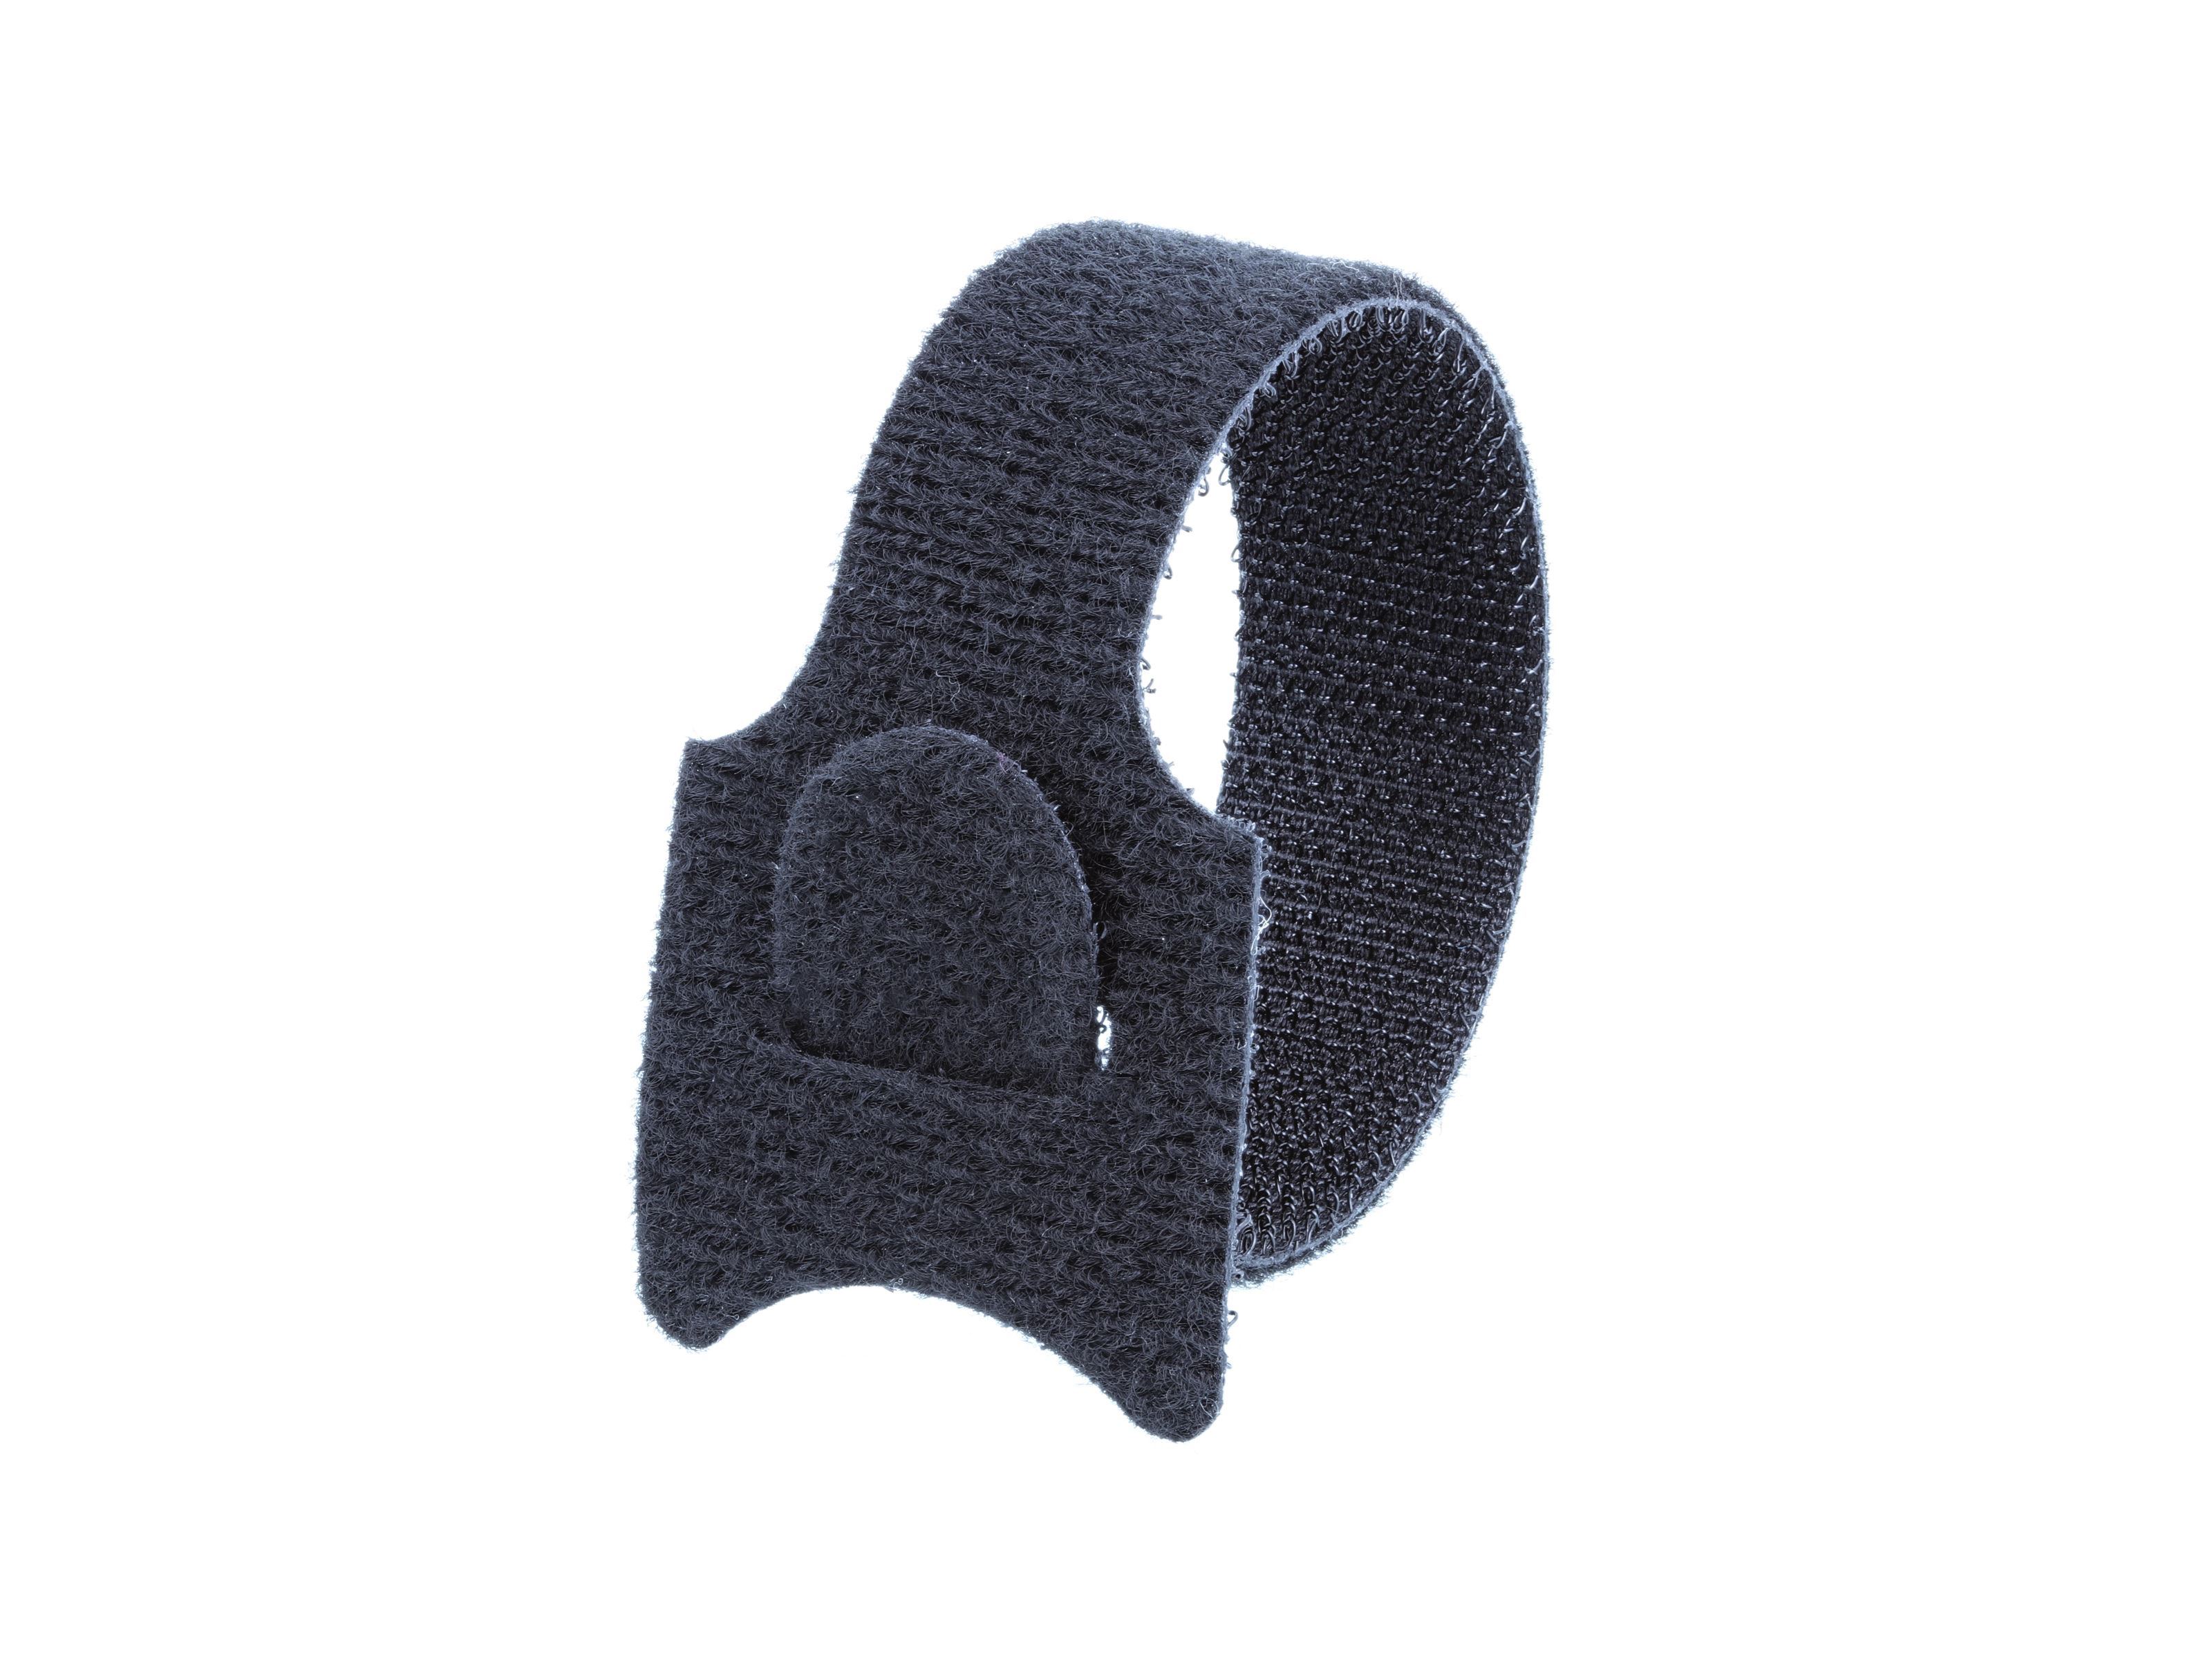 8 Inch Black Reuseable Tie Wrap - 100 - Secure™ Cable Ties